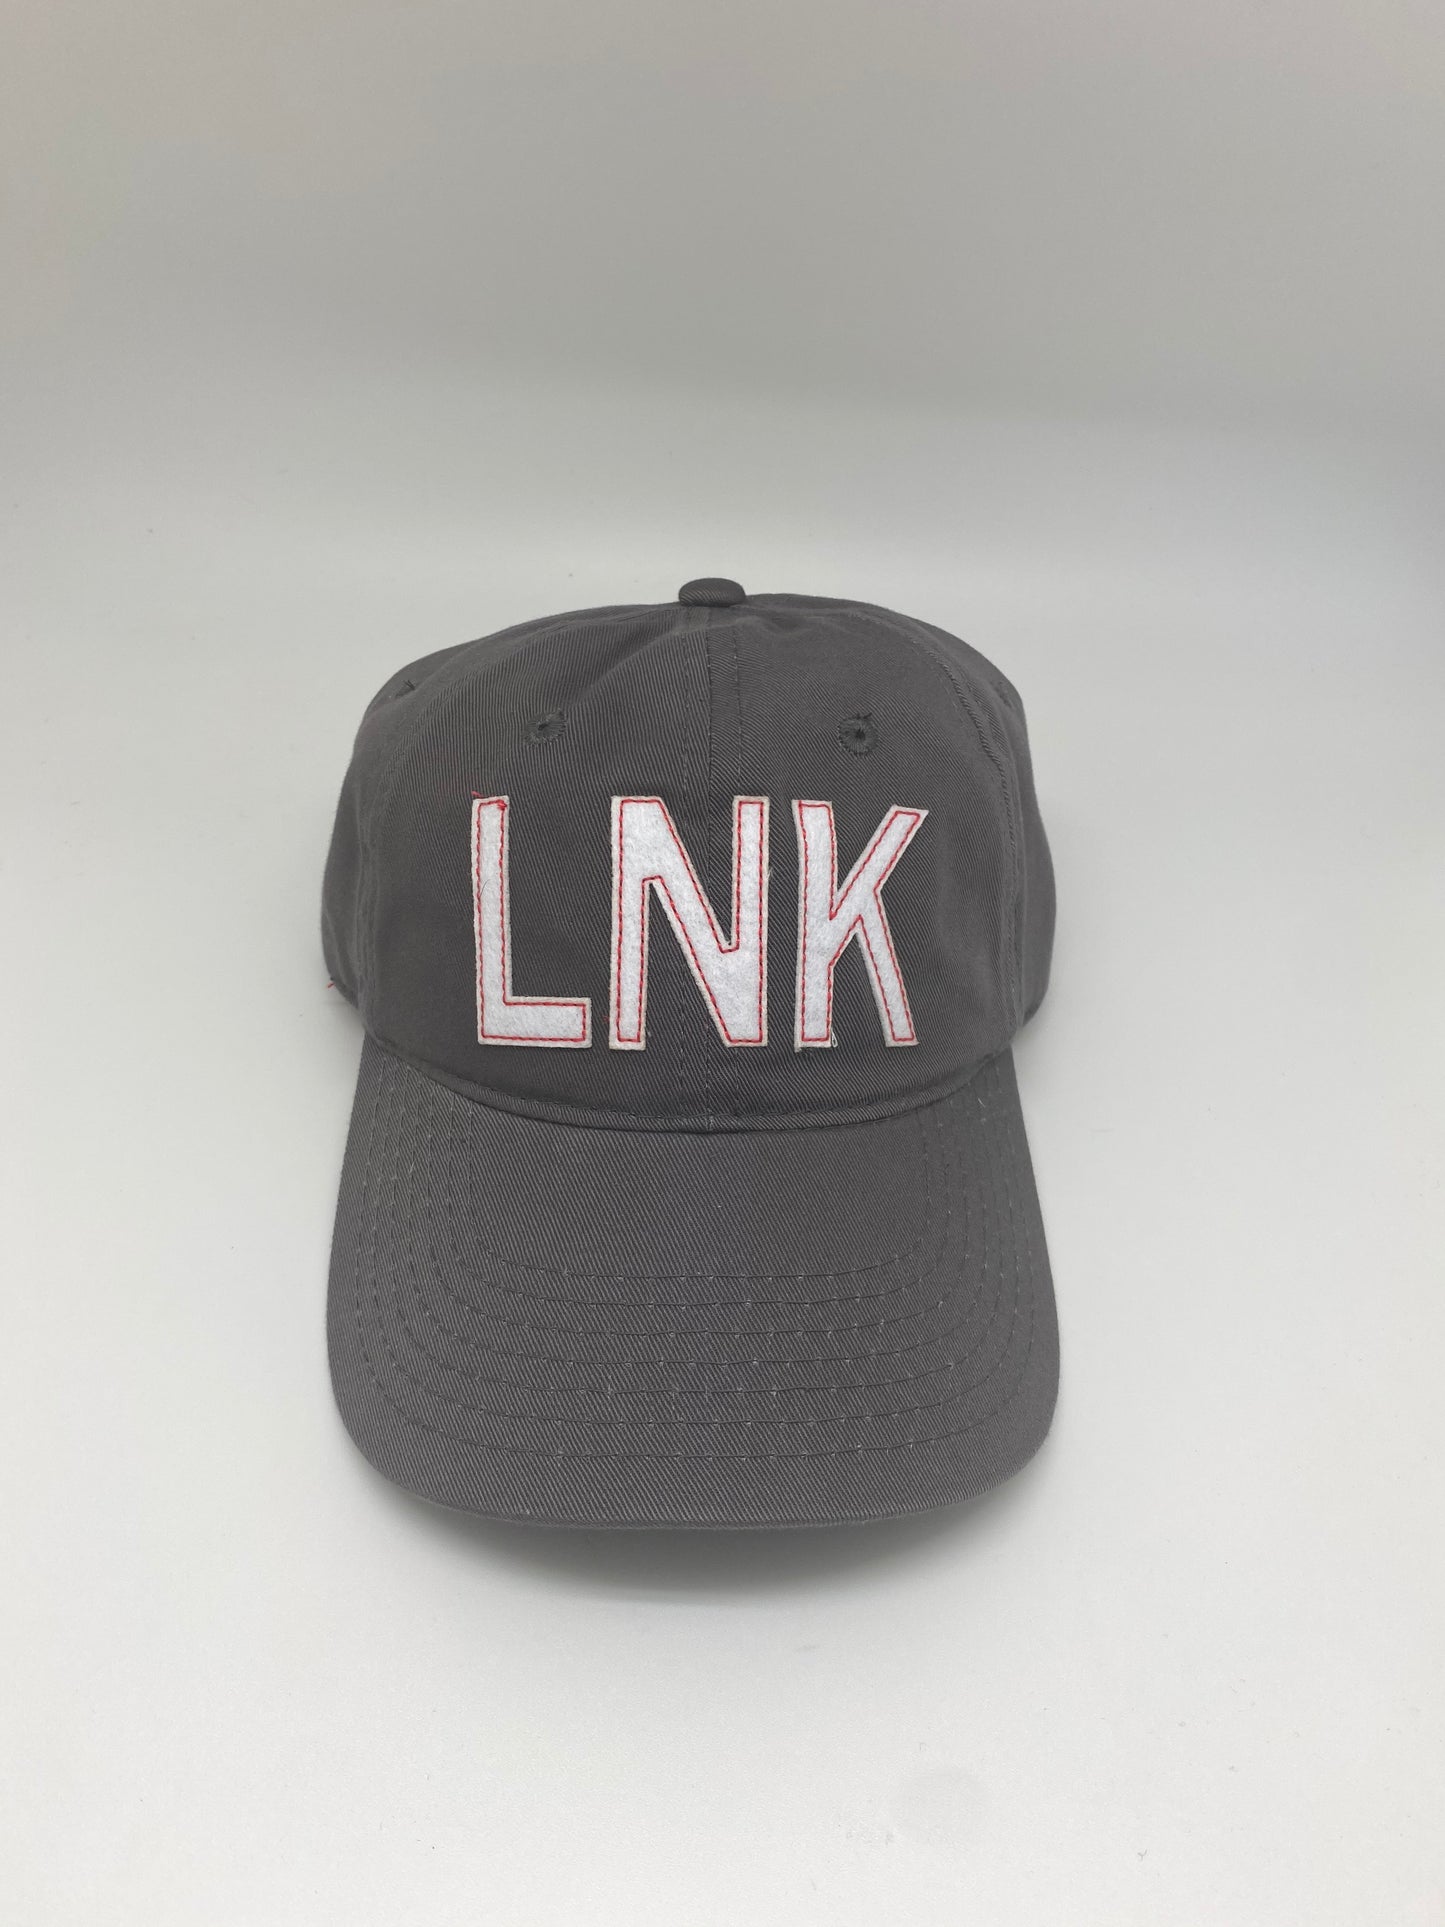 LNK- Lincoln, NE Hat